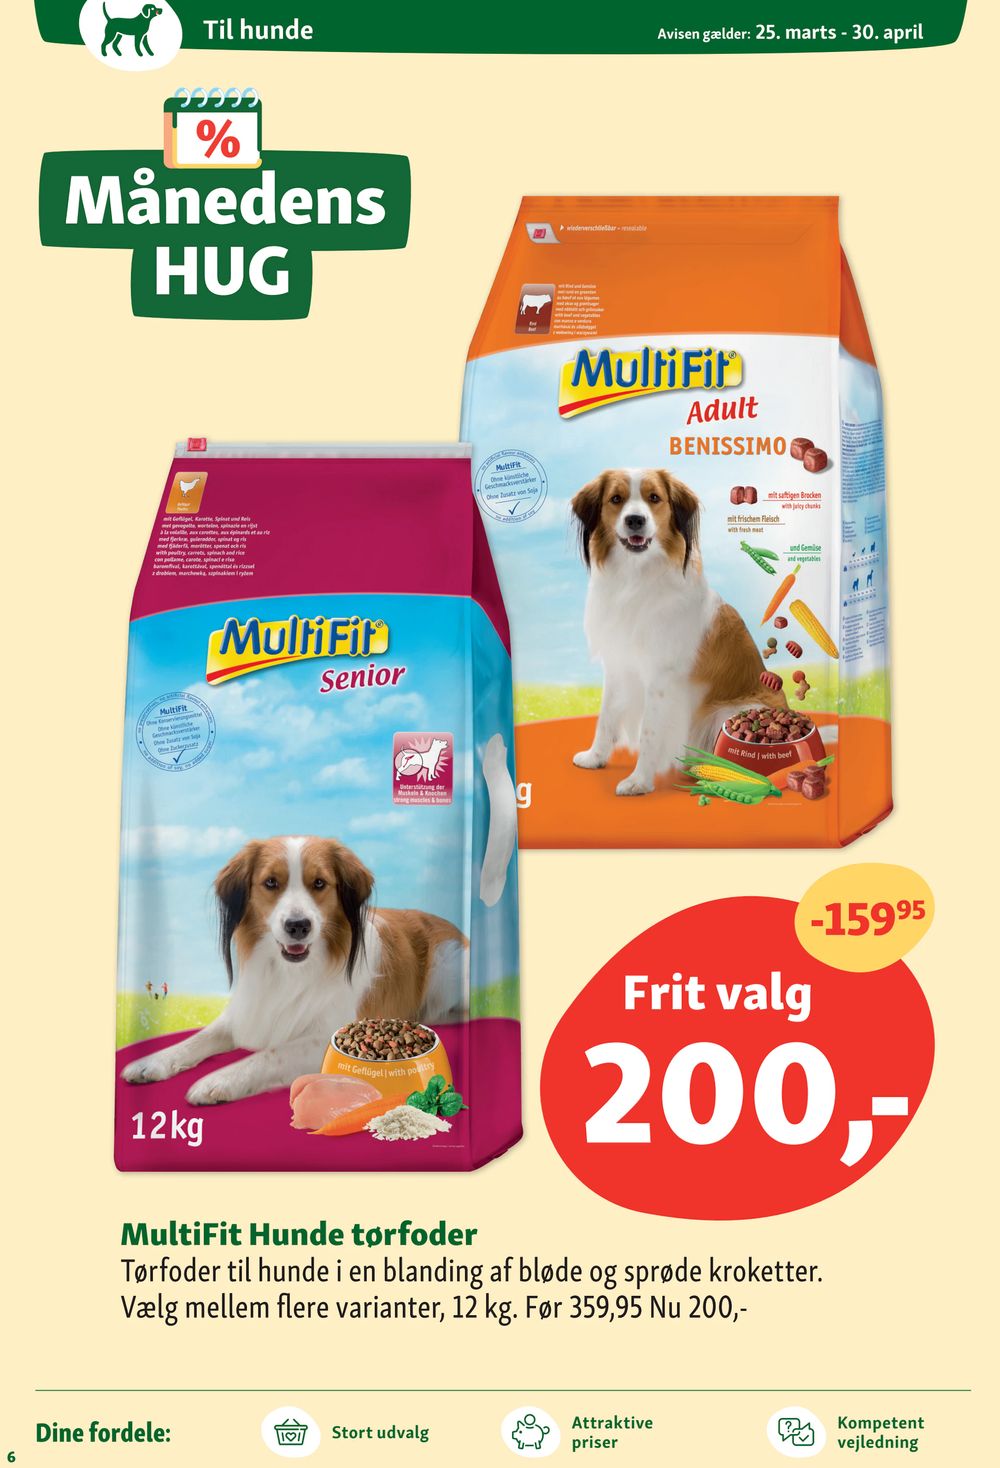 Tilbud på MultiFit Hunde tørfoder fra Maxi Zoo til 200 kr.